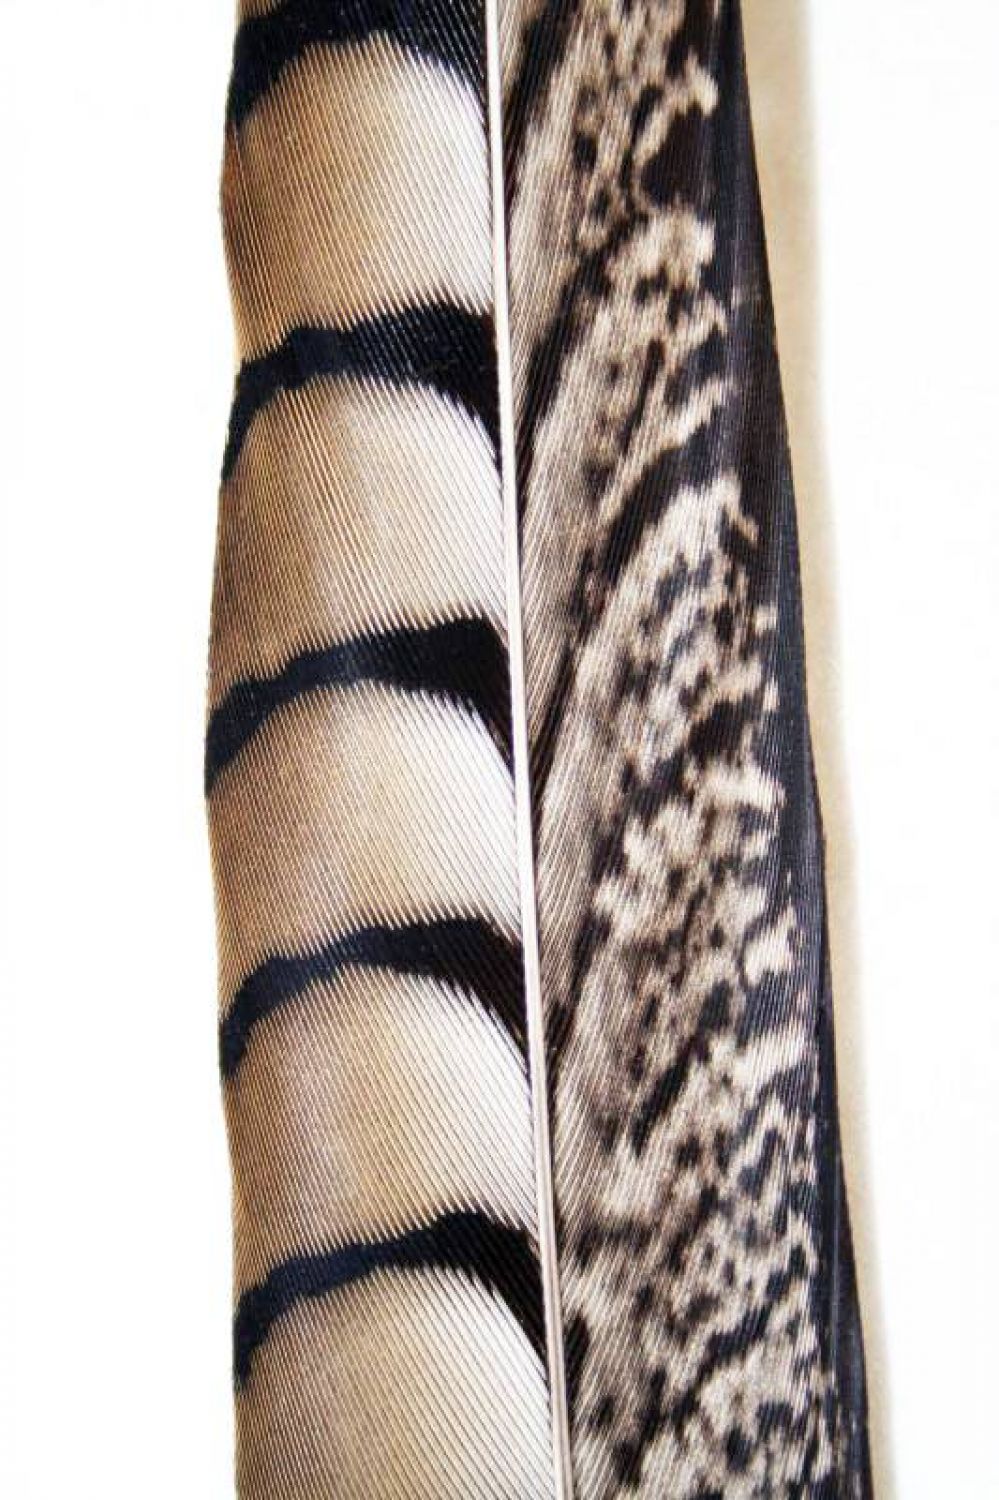 Lady-Amherst Pheasant 1st Q. 40-45cm